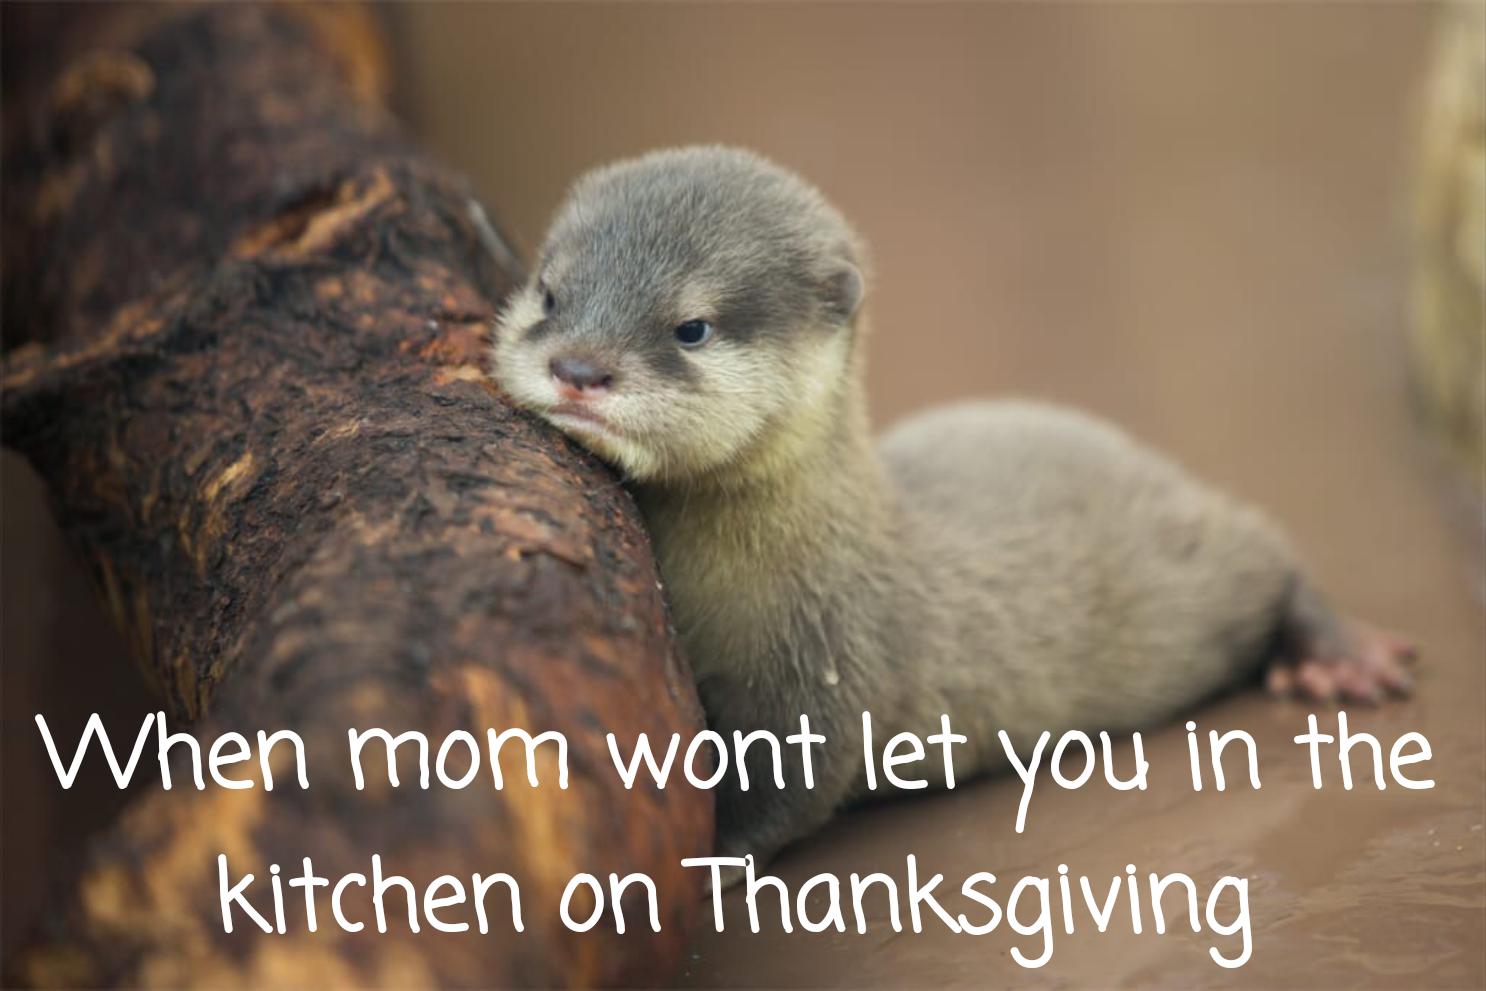 I otter give thanks